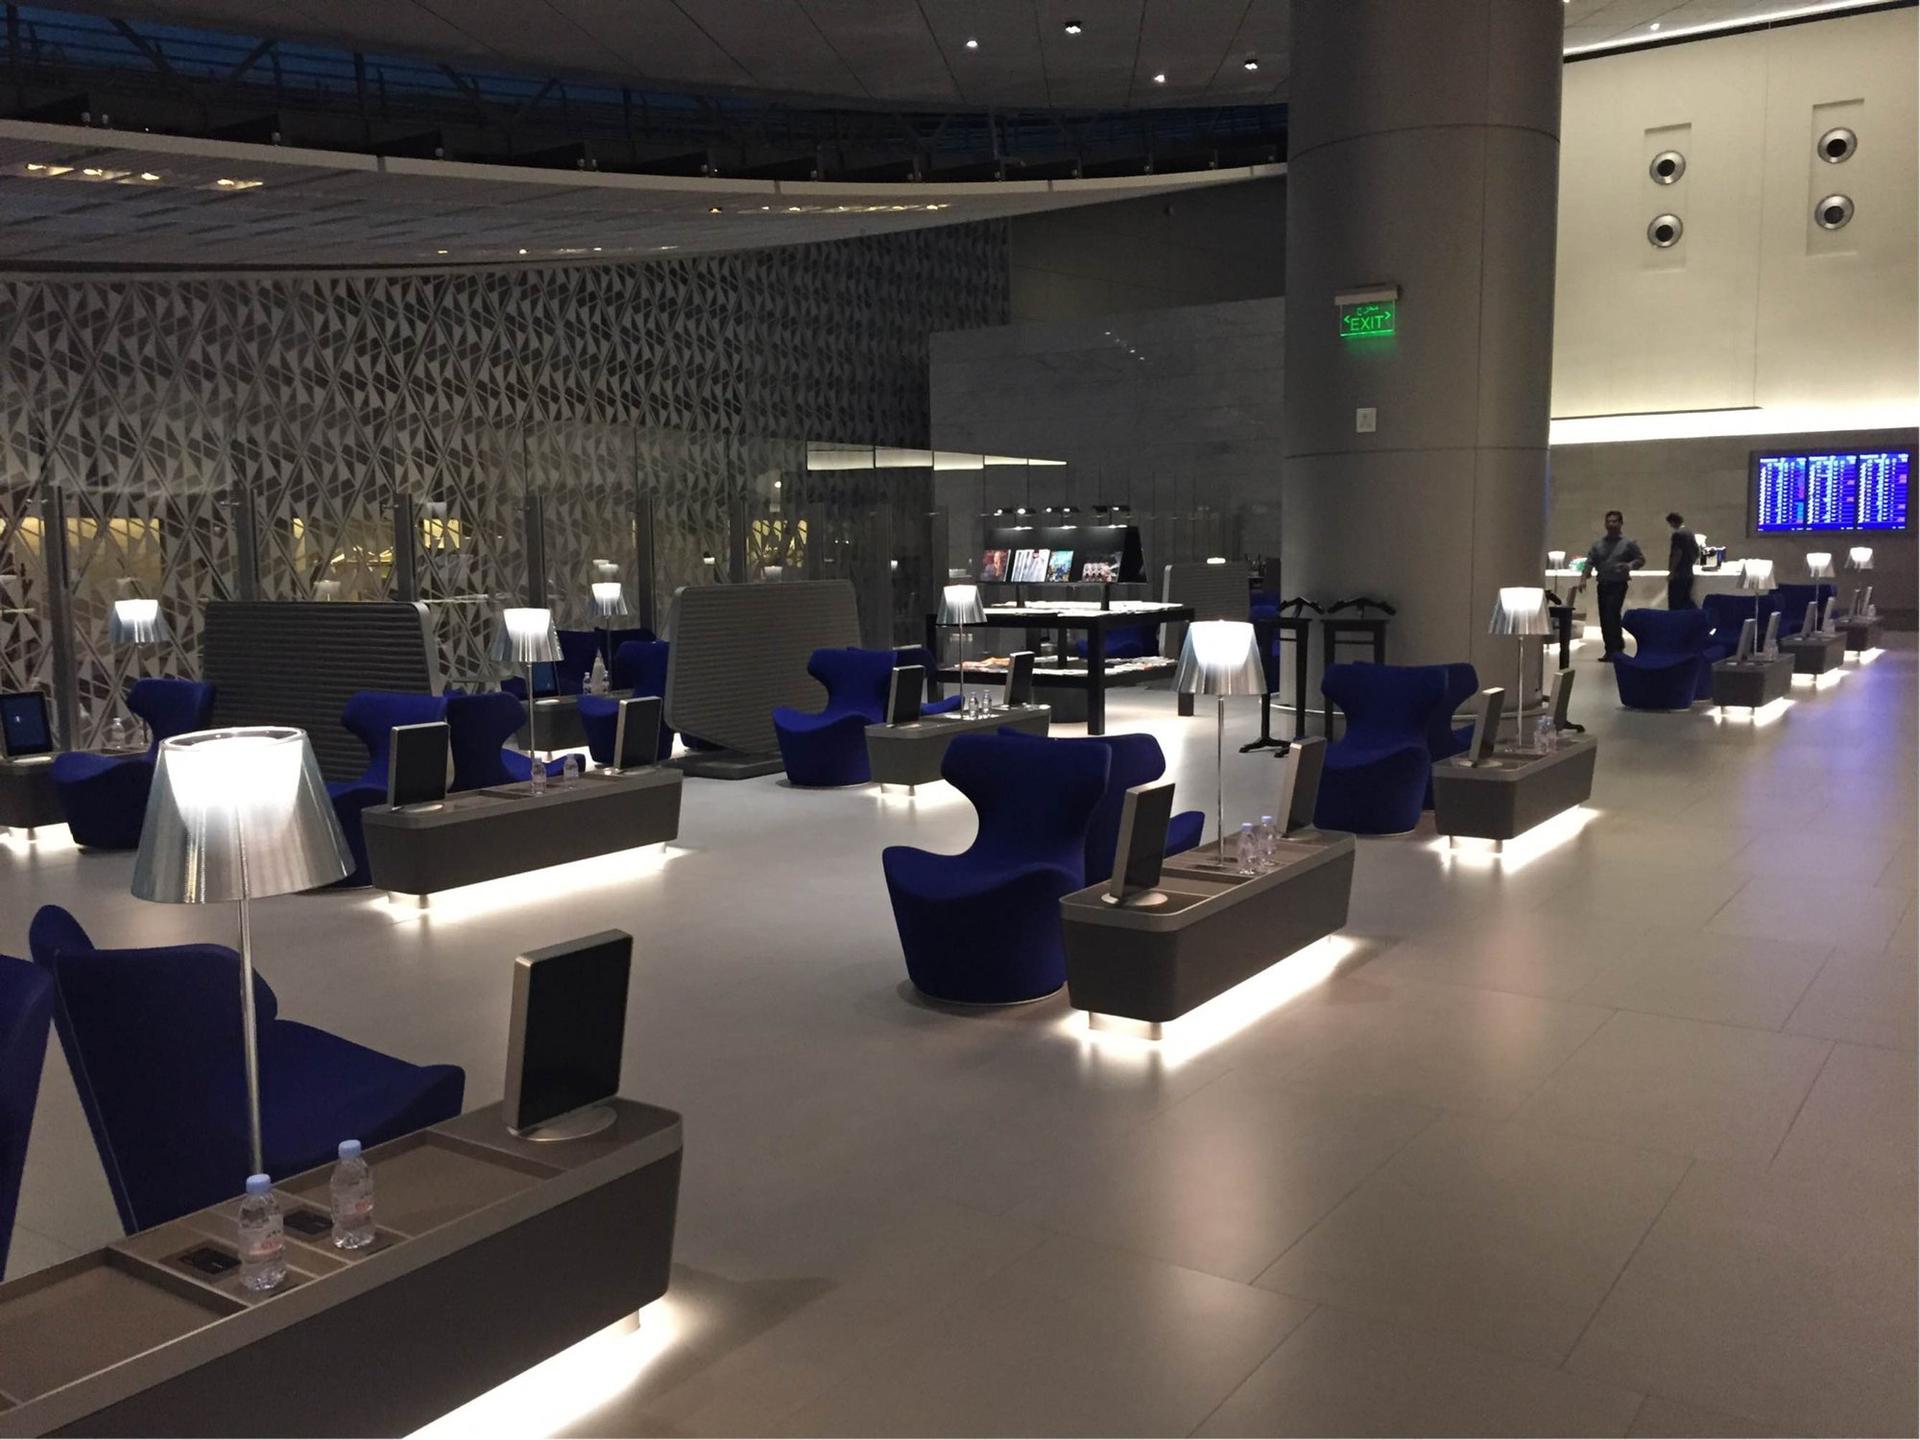 Qatar Airways Al Mourjan Business Class Lounge image 17 of 100